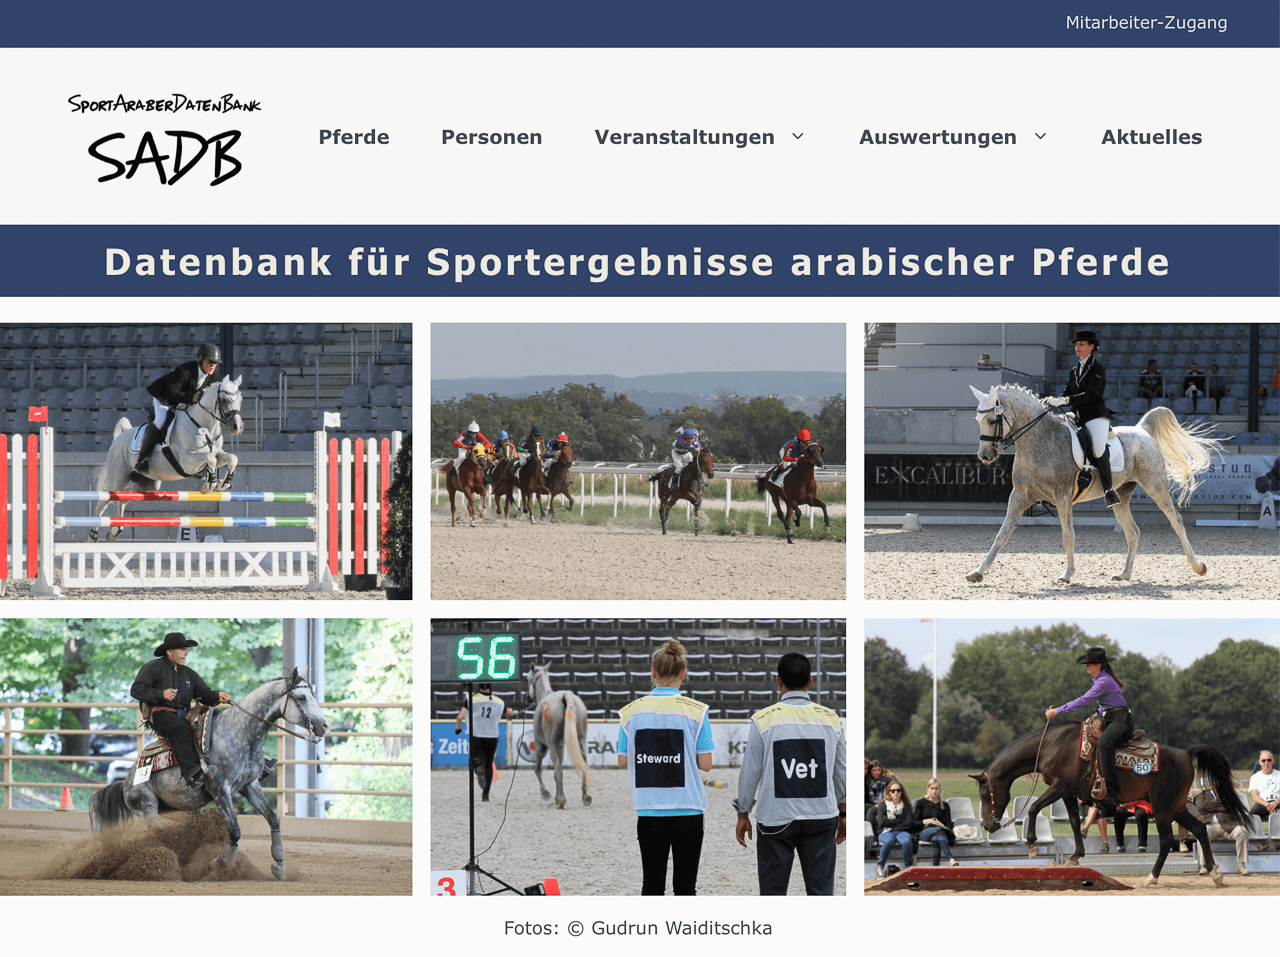 (c) Araber-sportpferde.de